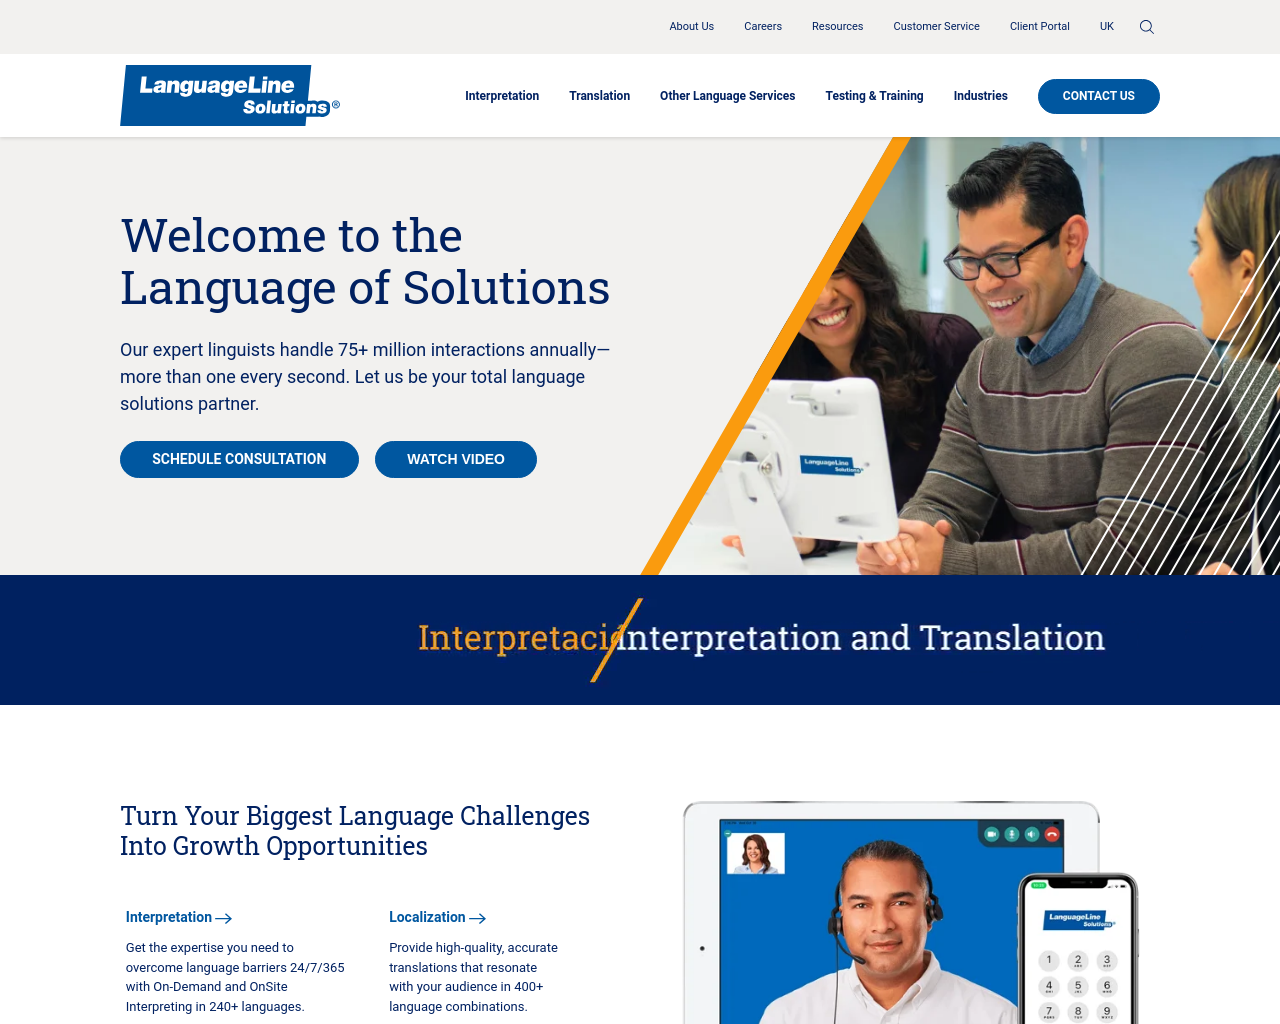 languageline.com